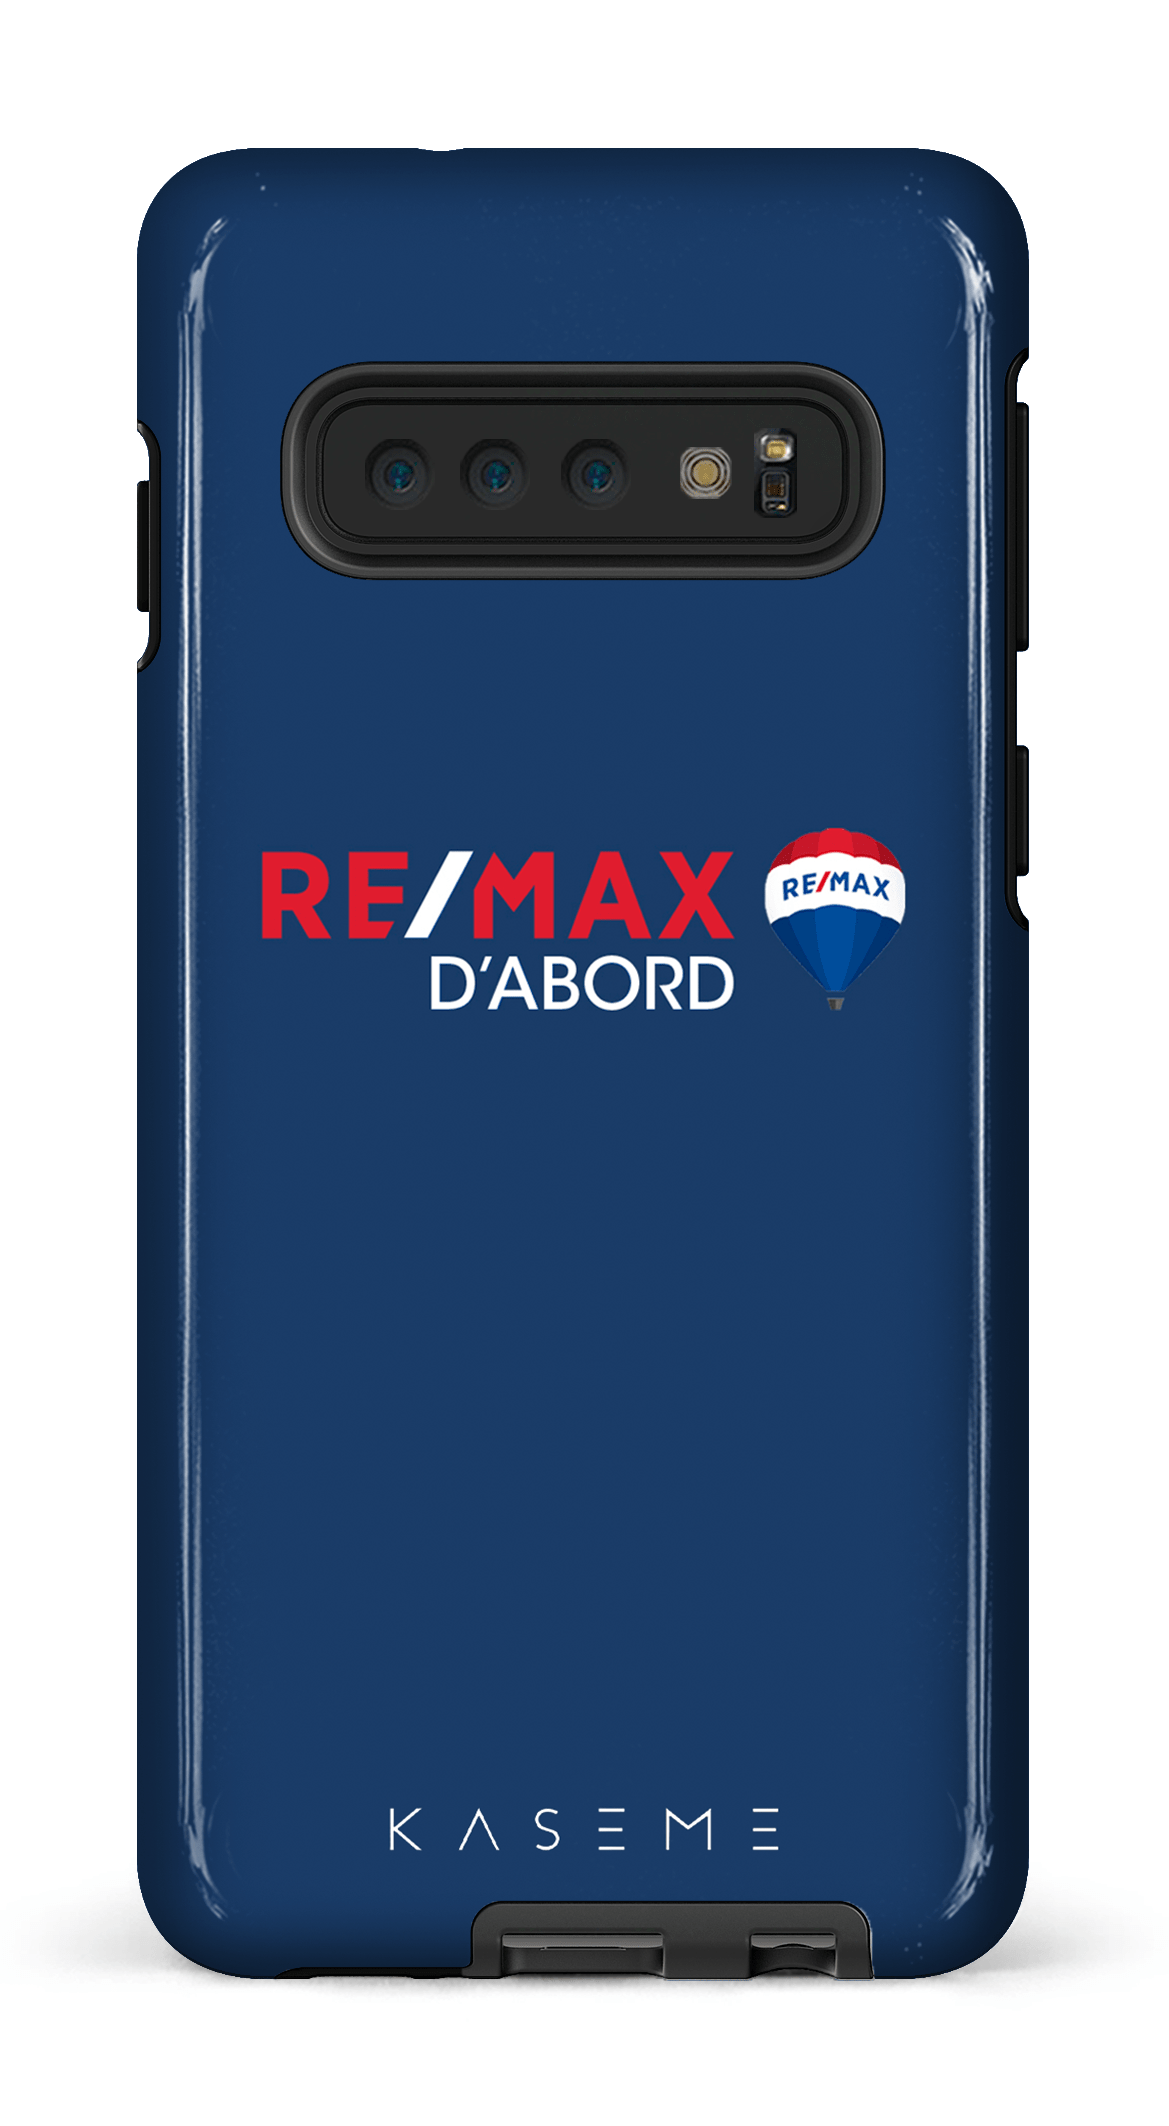 Remax D'abord Bleu - Galaxy S10